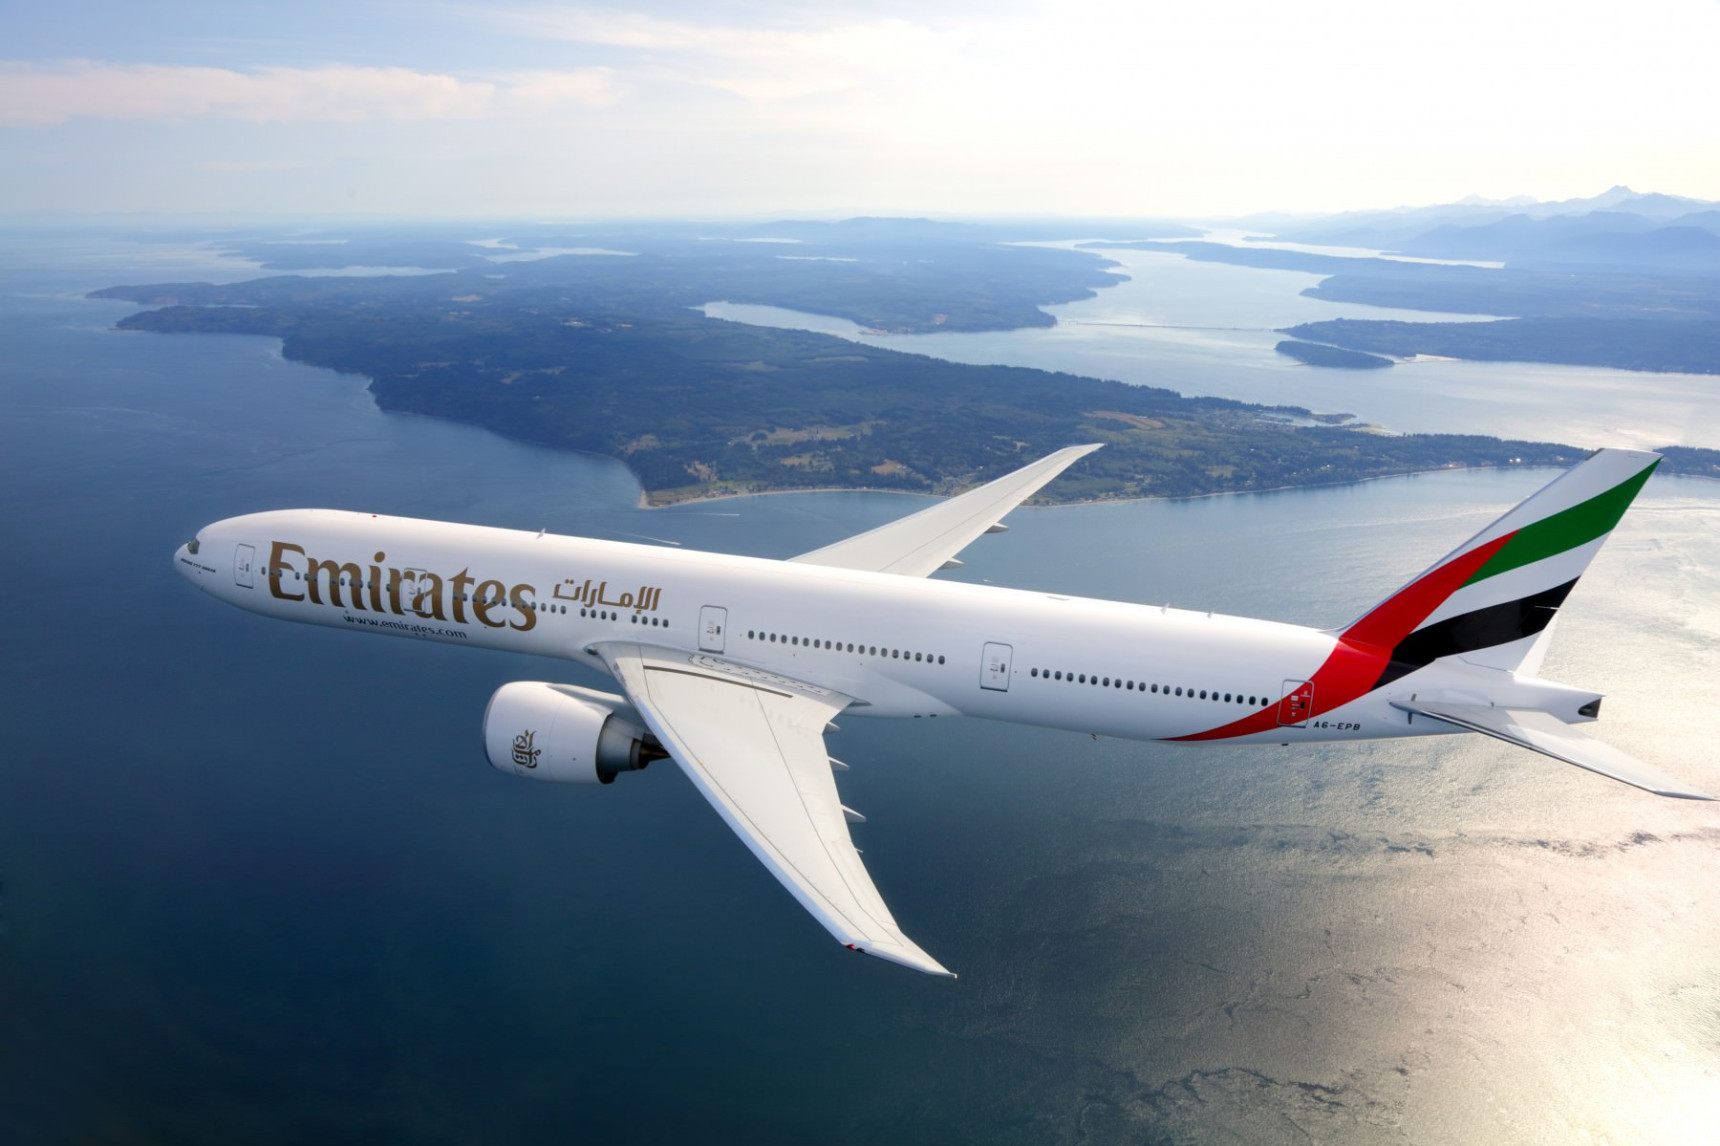 Emirates jumbo jet flying